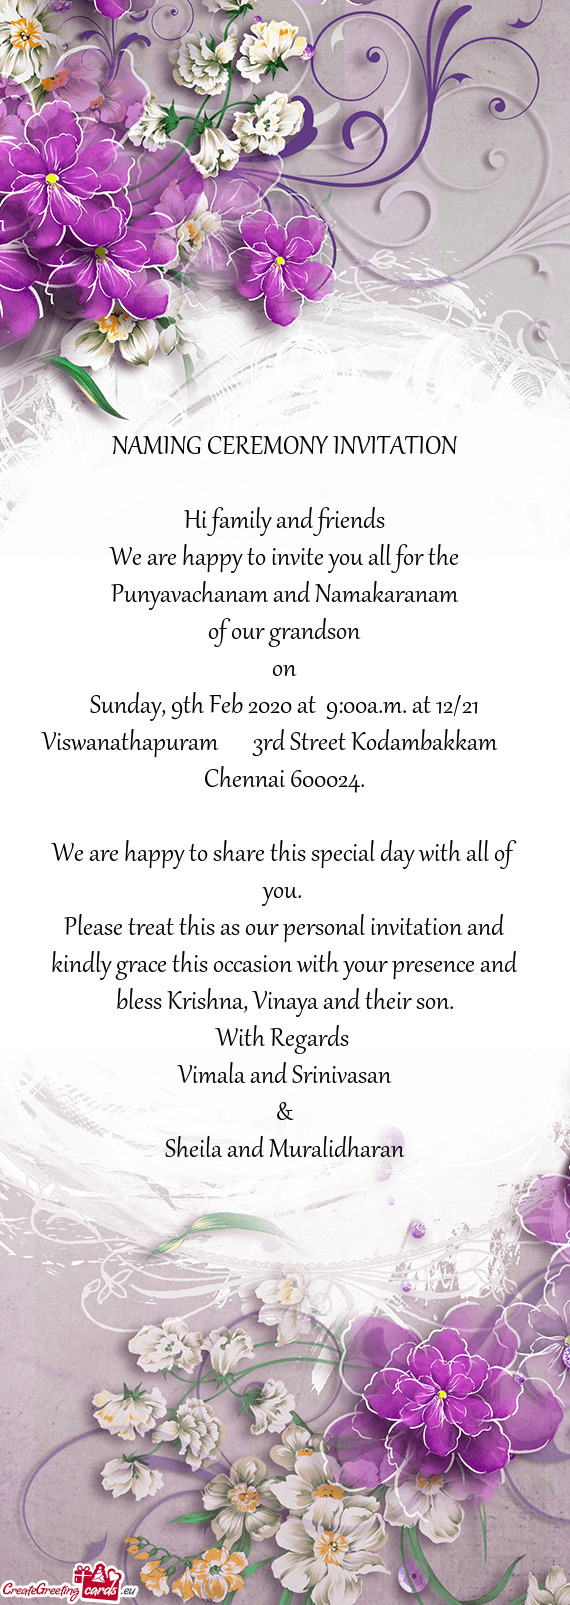 Sunday, 9th Feb 2020 at 9:00a.m. at 12/21 Viswanathapuram  3rd Street Kodambakkam  Chenna